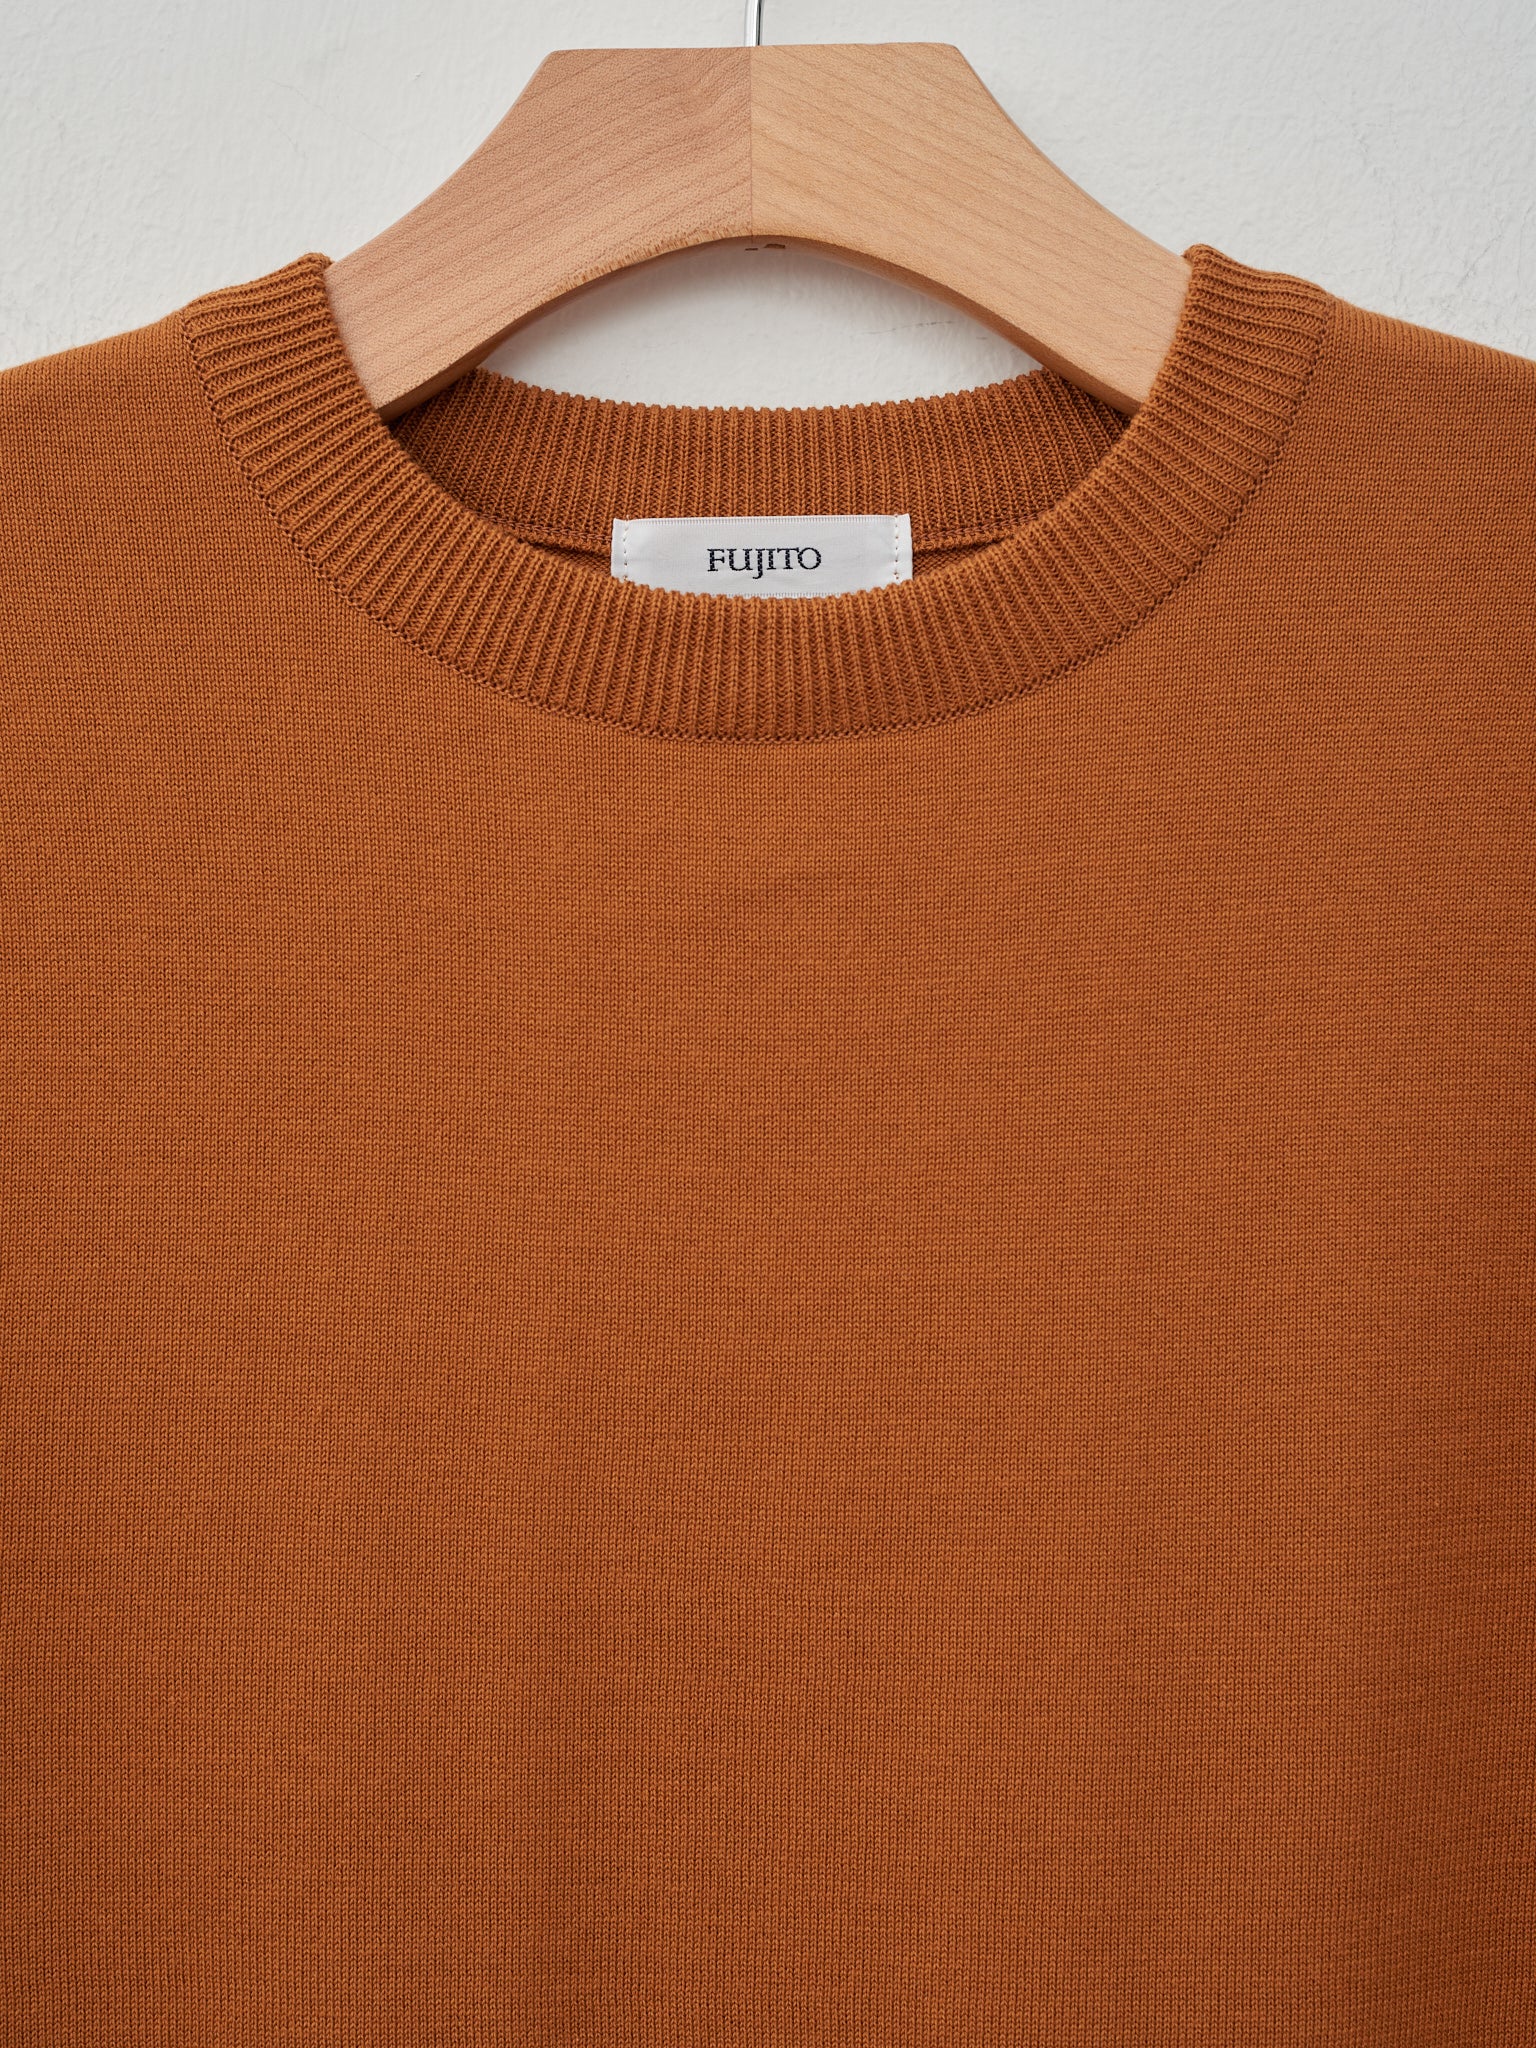 Namu Shop - Fujito C/N Knit T-Shirt - Brown Gold